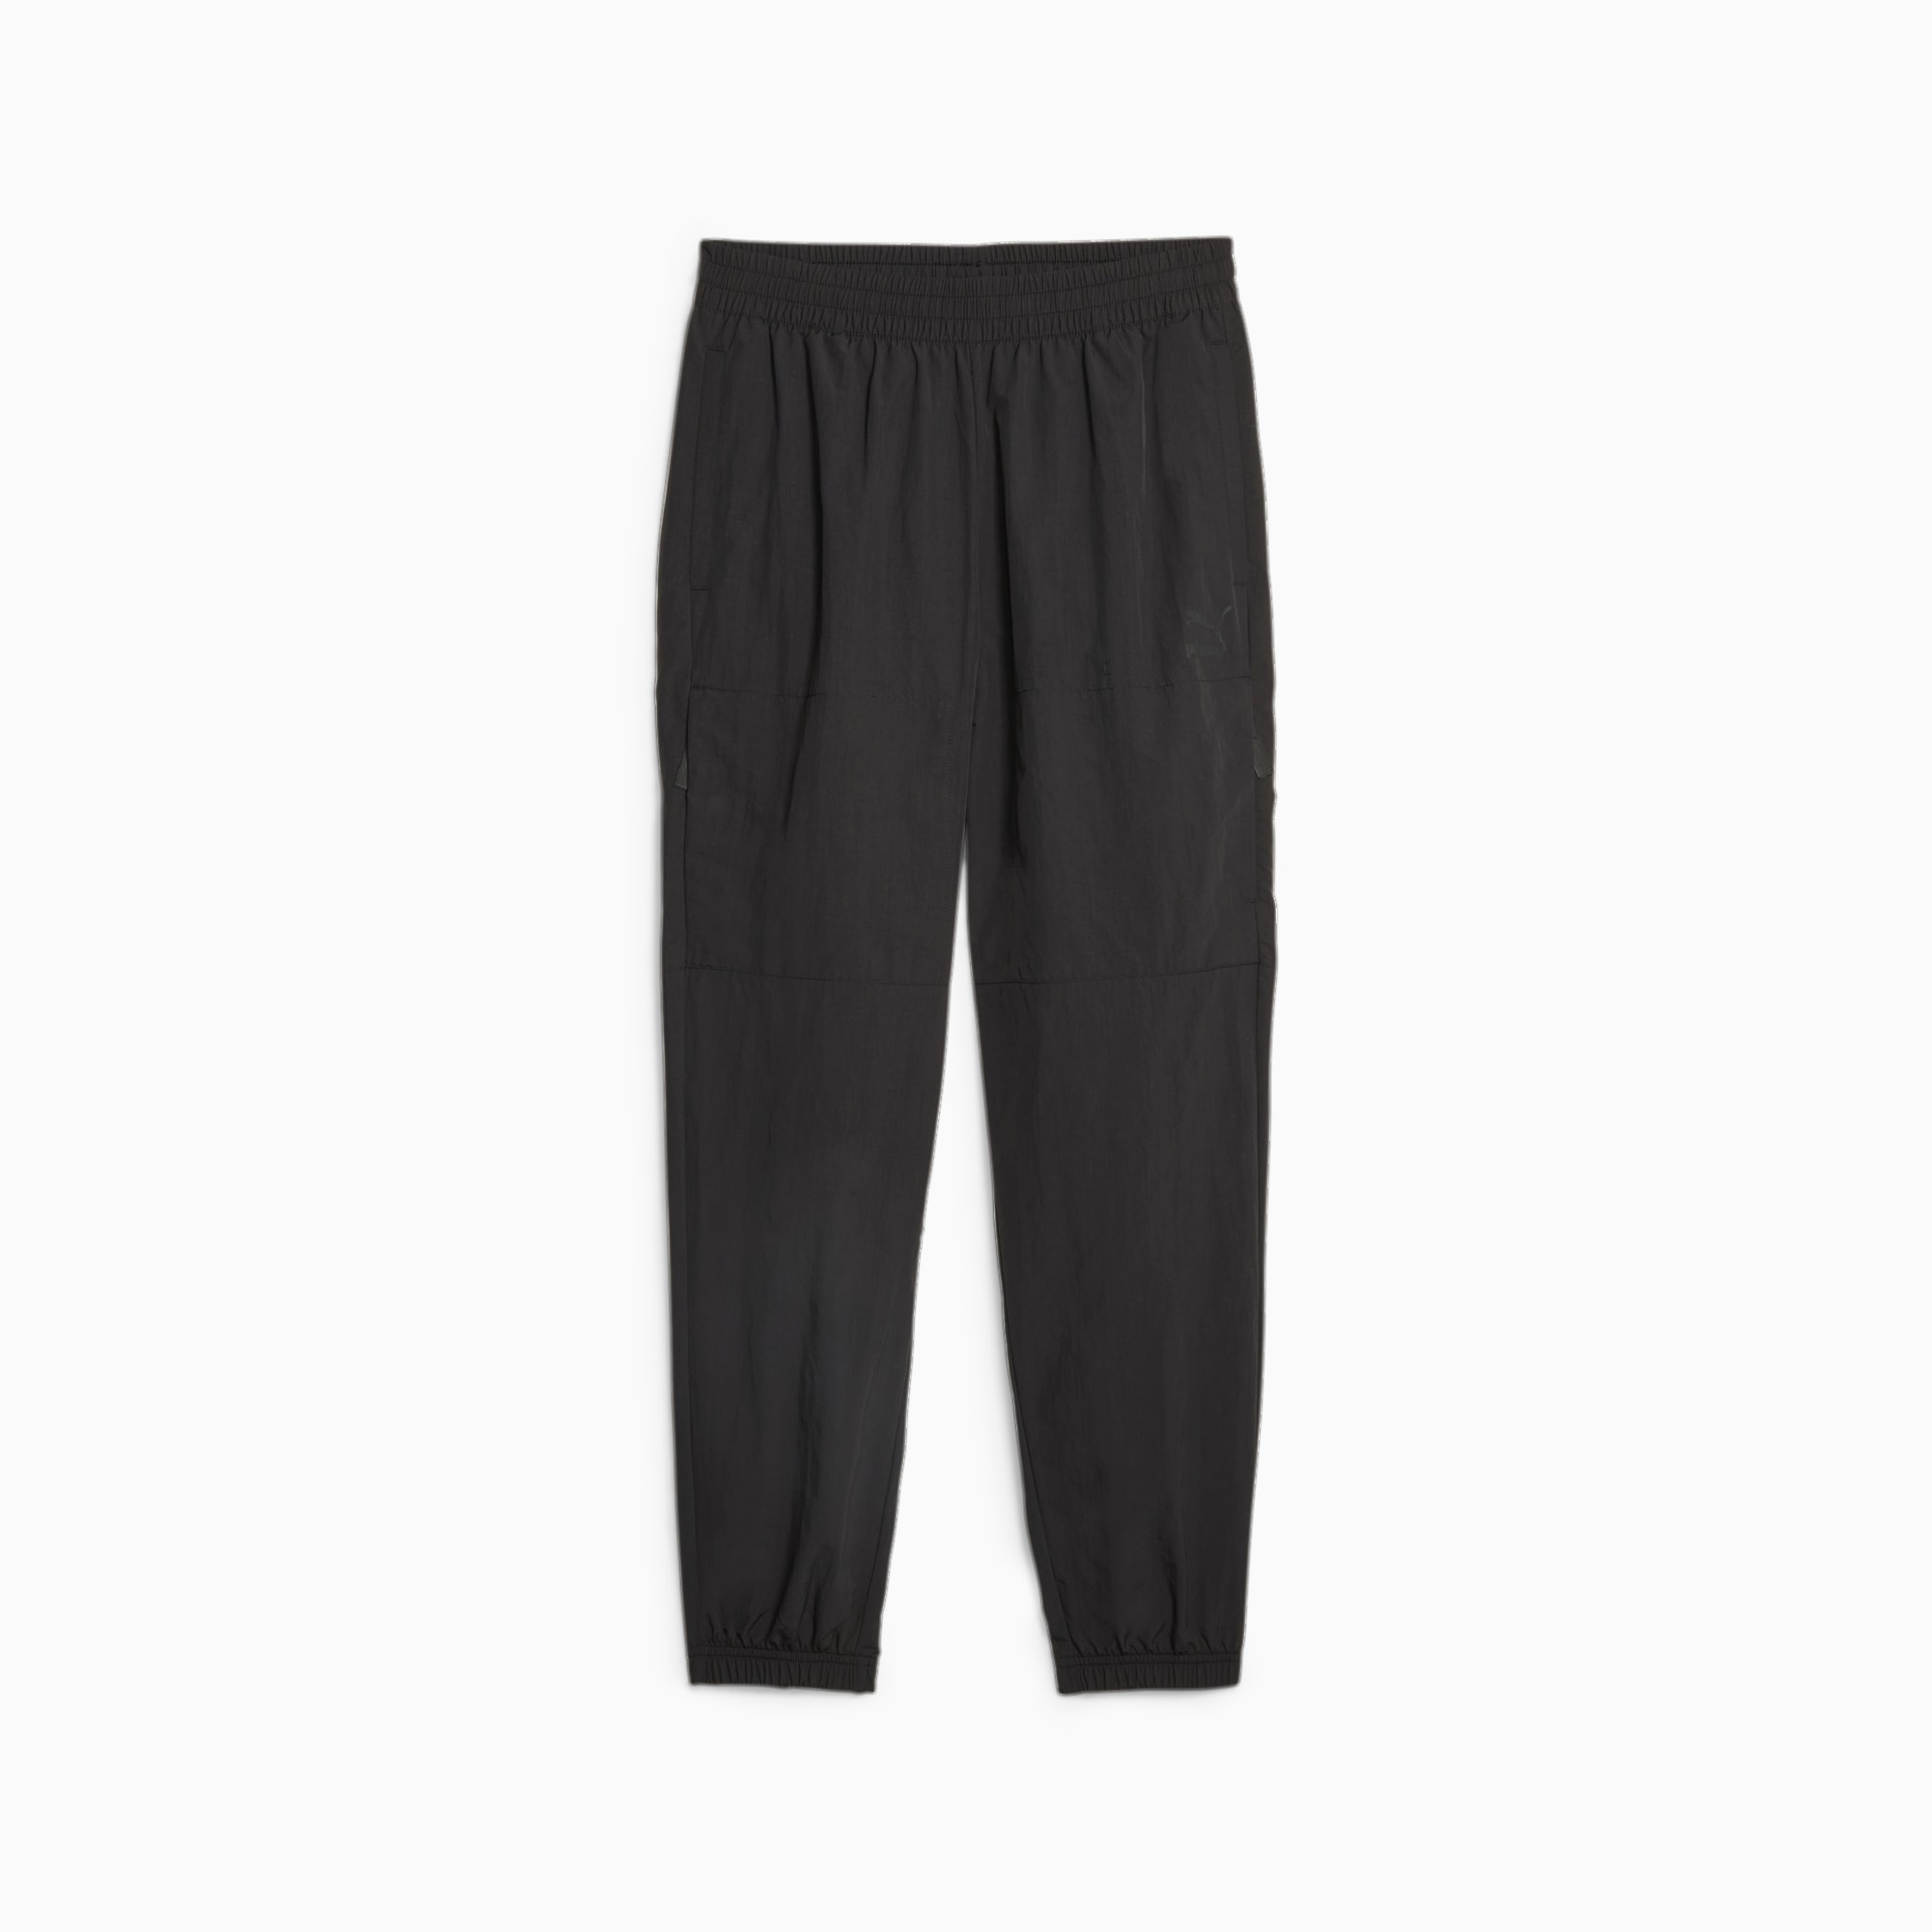 PUMA Classics Utility Men's Cargo Pants, Black, Size 4XL, Clothing